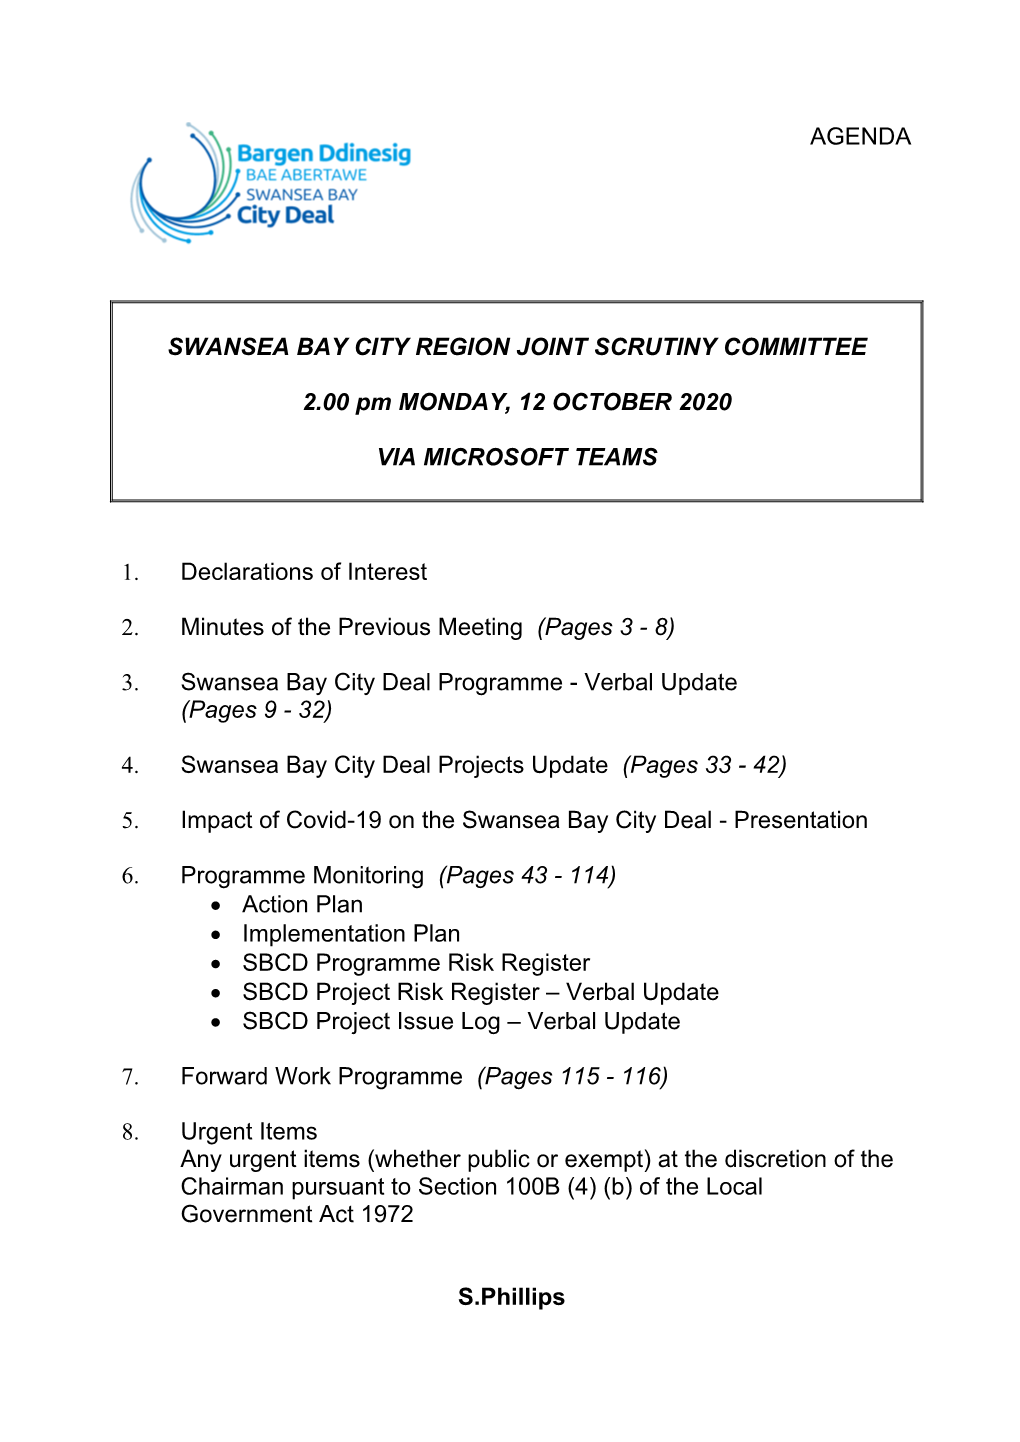 Agenda Document for Swansea Bay City Region Joint Scrutiny